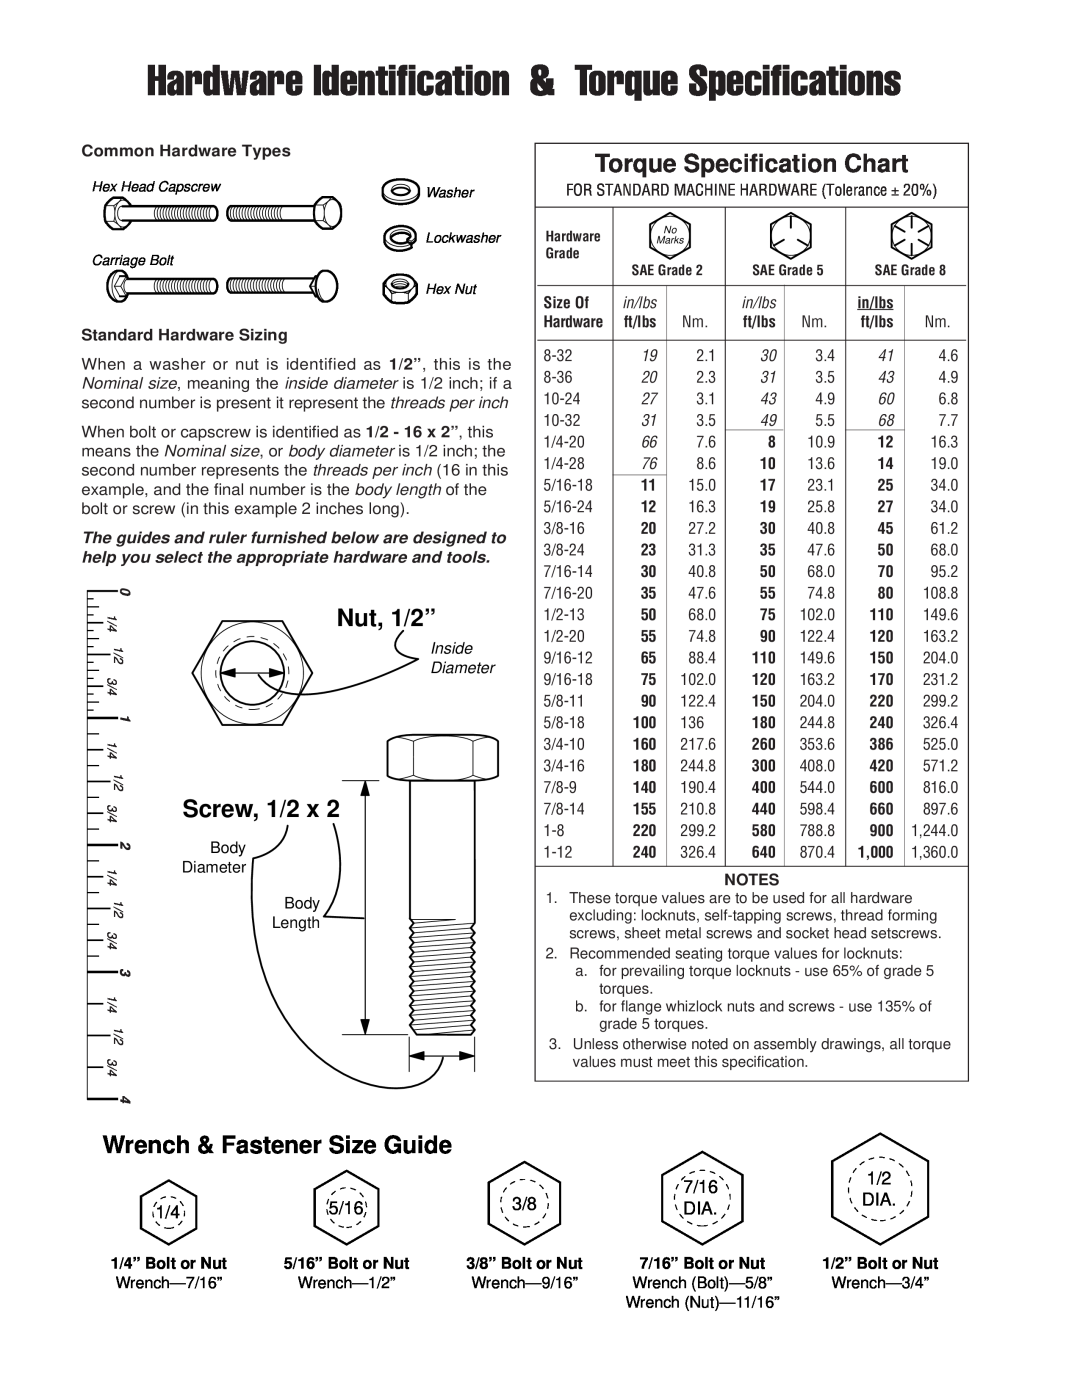 Simplicity 1694146 Hardware Identification & Torque Specifications, Torque Specification Chart, Nut, 1/2”, Screw, 1/2 